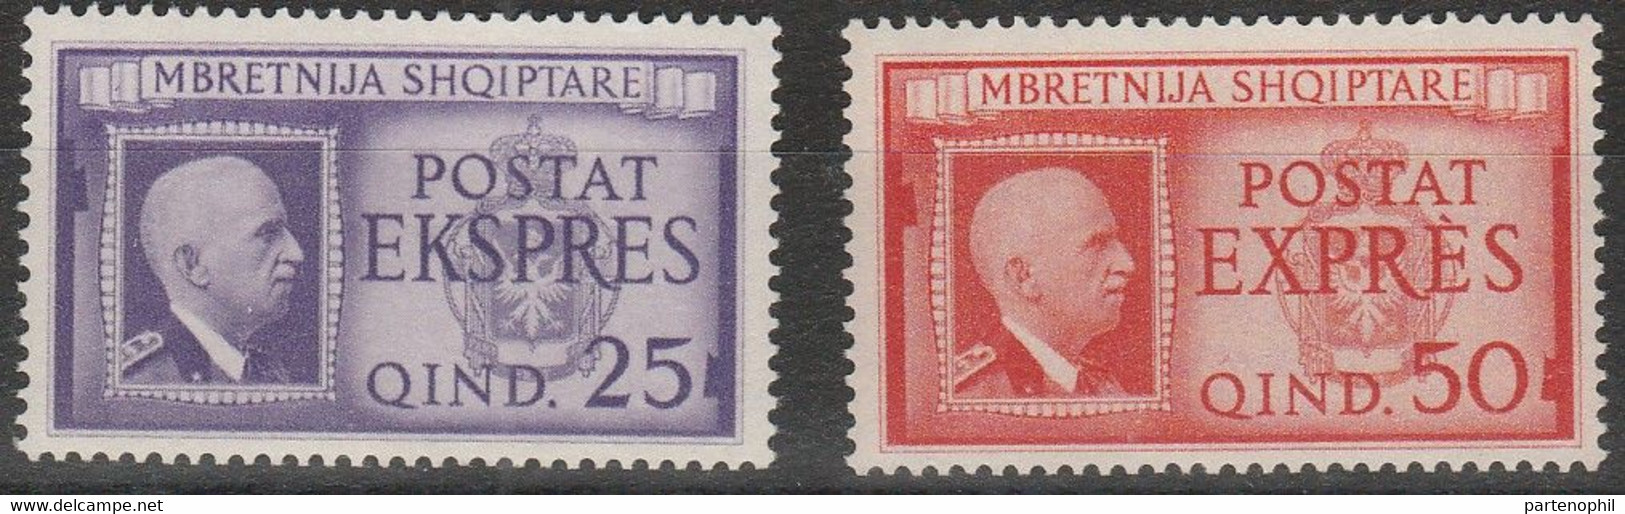 281 Occupazione Italiana Albania  Espressi - 1940 - Vittorio Emanuele II N. 1/2. Cat. € 110,00. SPL MNH - Albania